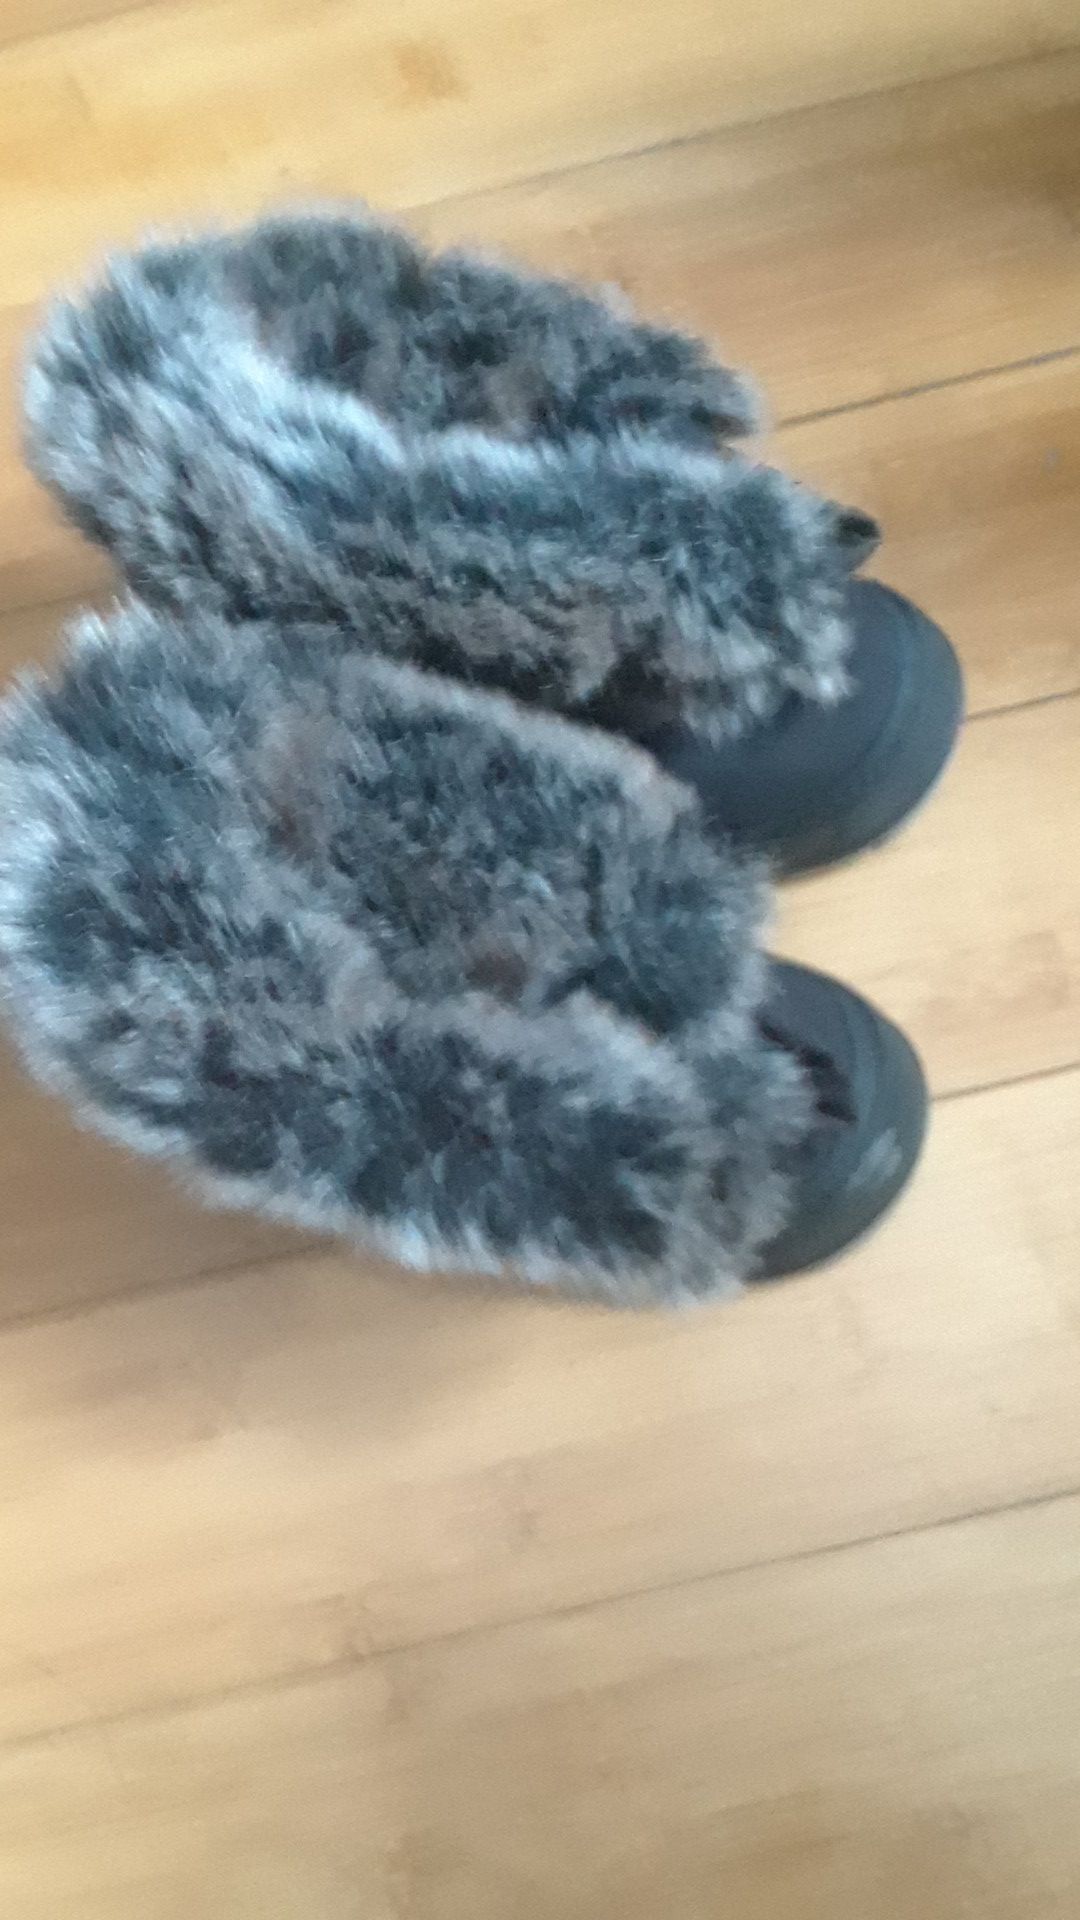 Snow rock kid boots